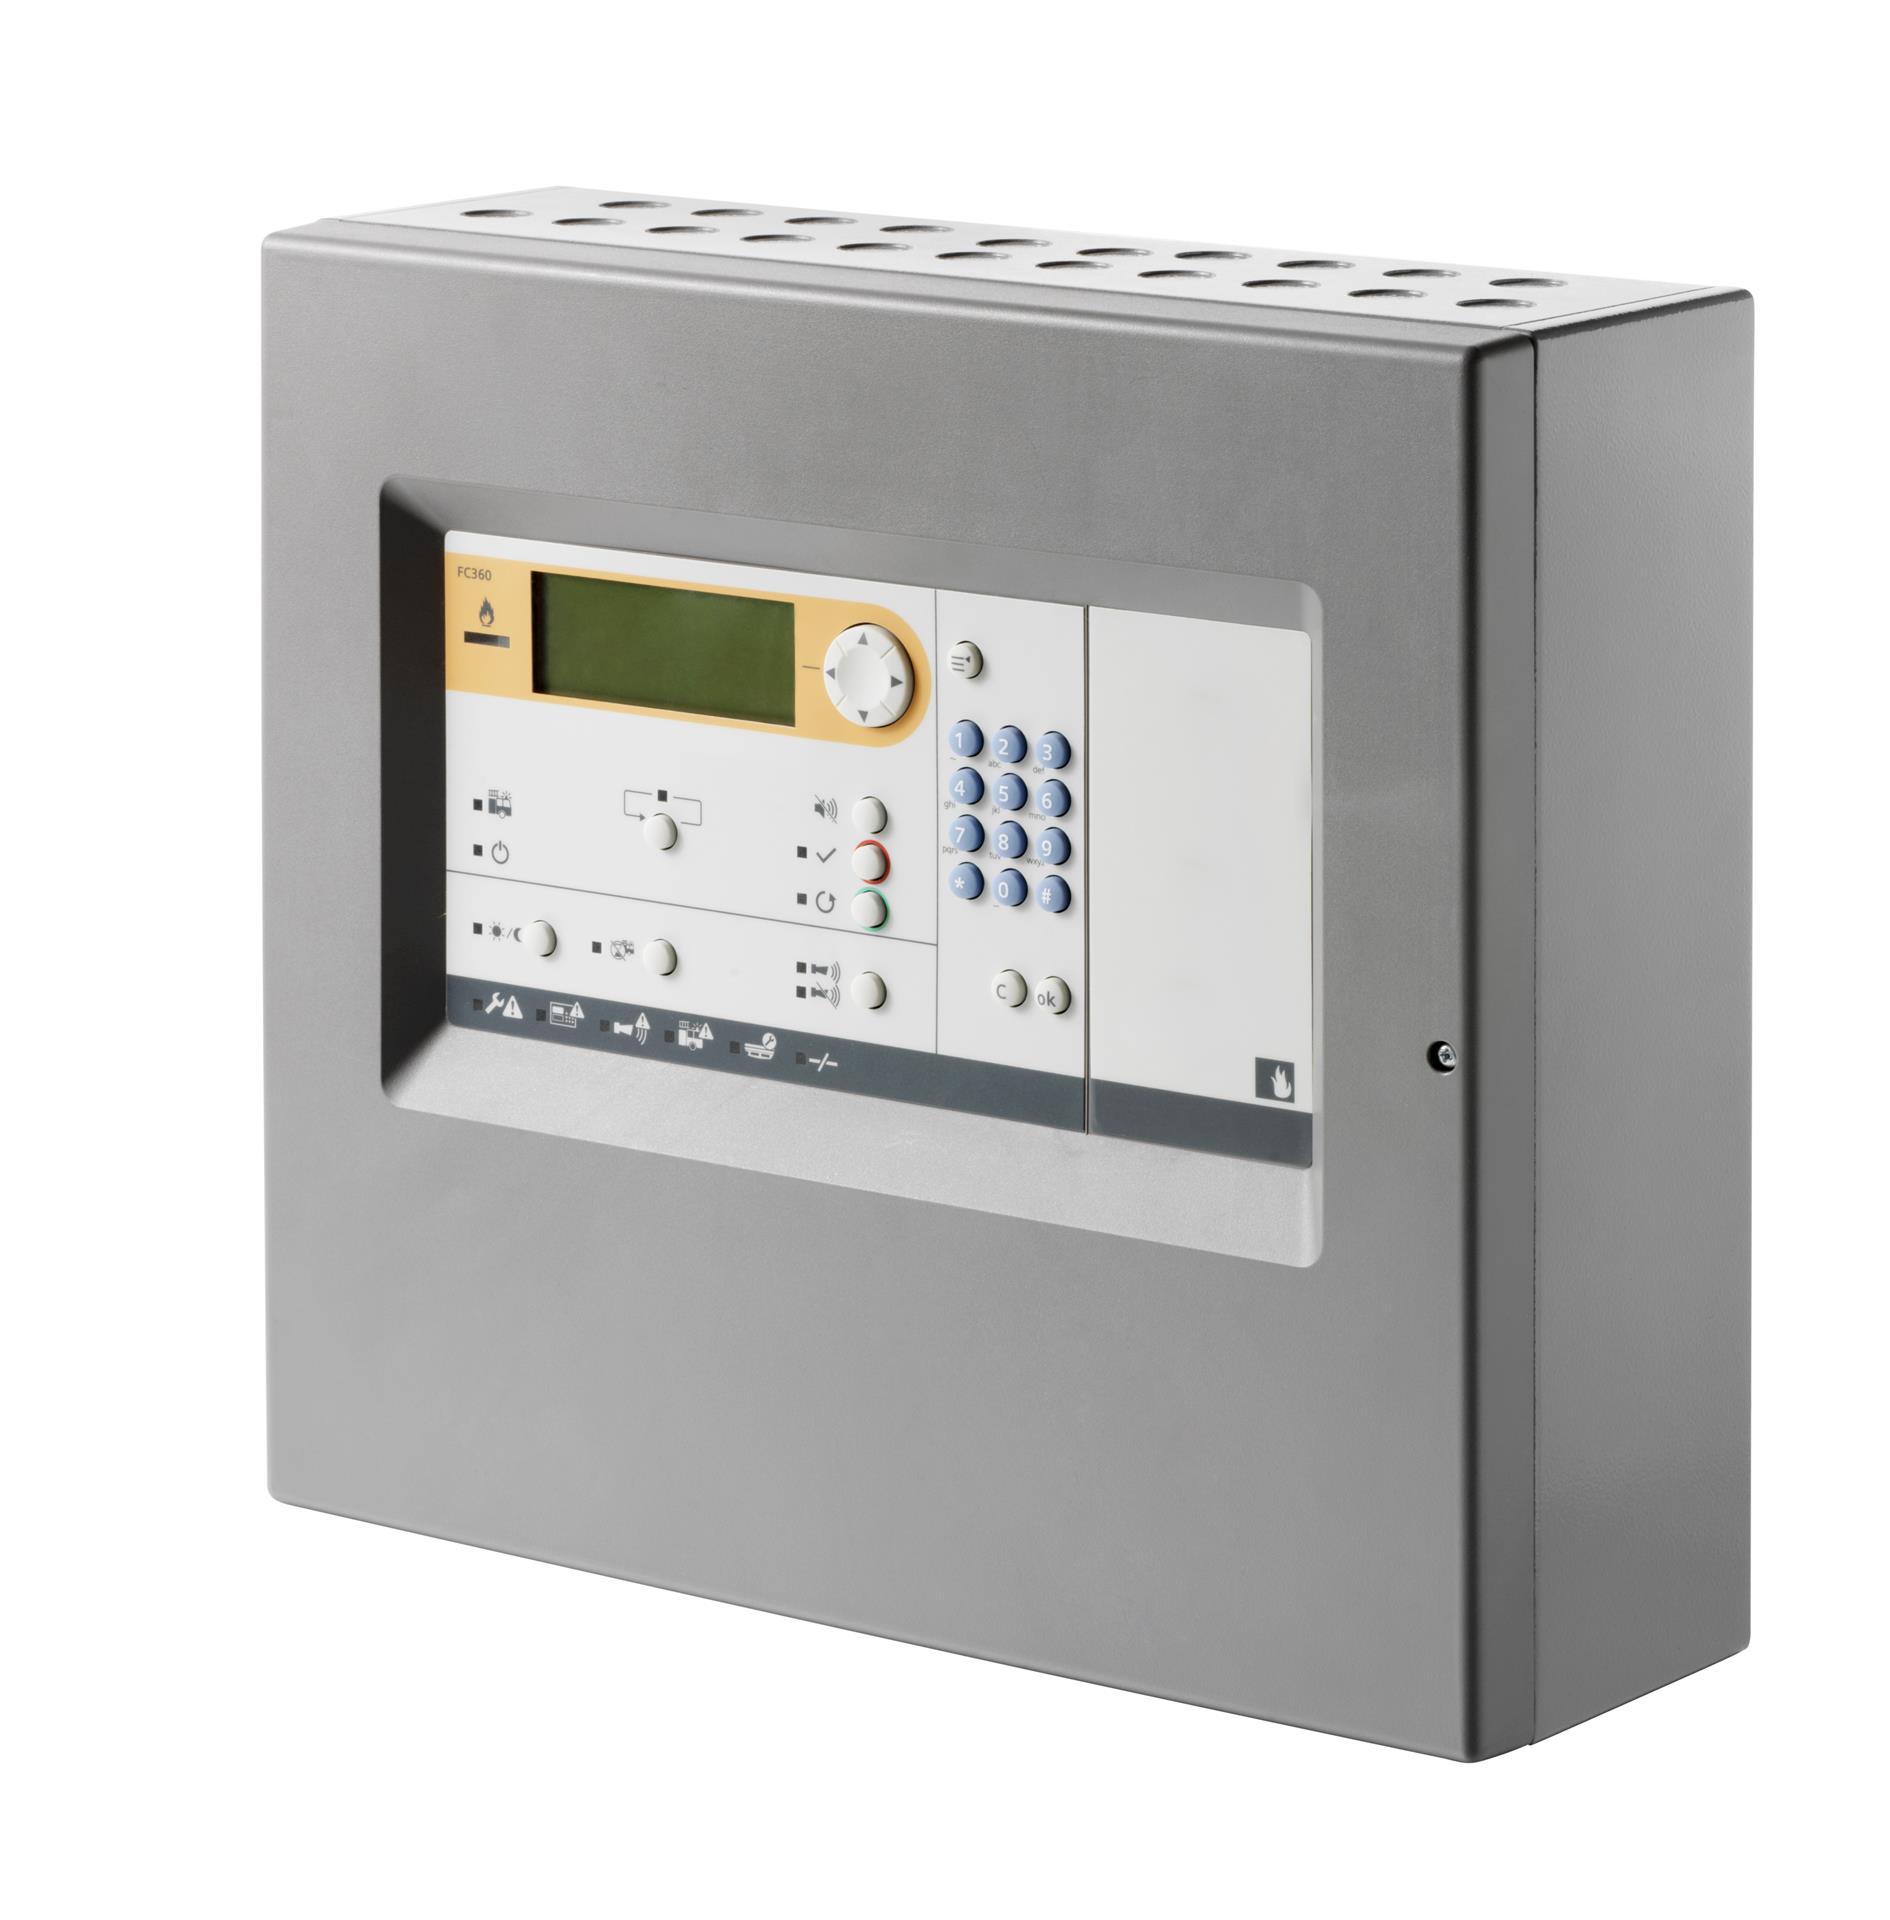 Cerberus FIT İnteraktif Yangın Algılama ve Alarm Kontrol Paneli - Kompakt Kasa (1 loop, 126 adres)